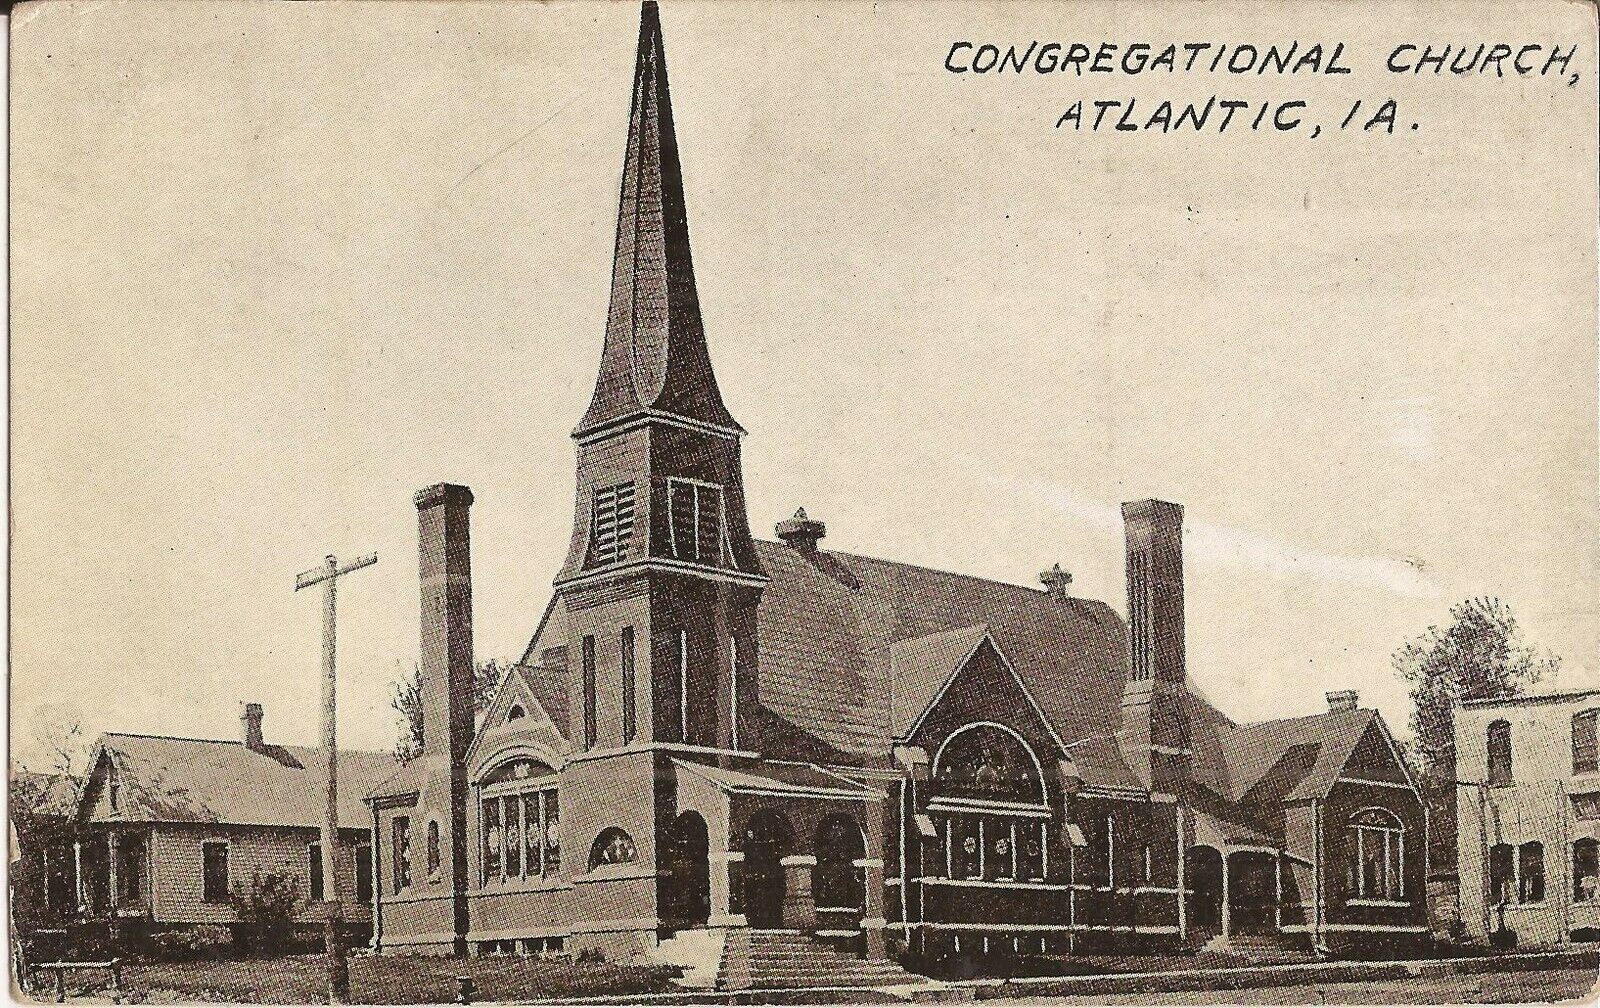 Atlantic, IOWA - Congregational Church - ARCHITECTURE